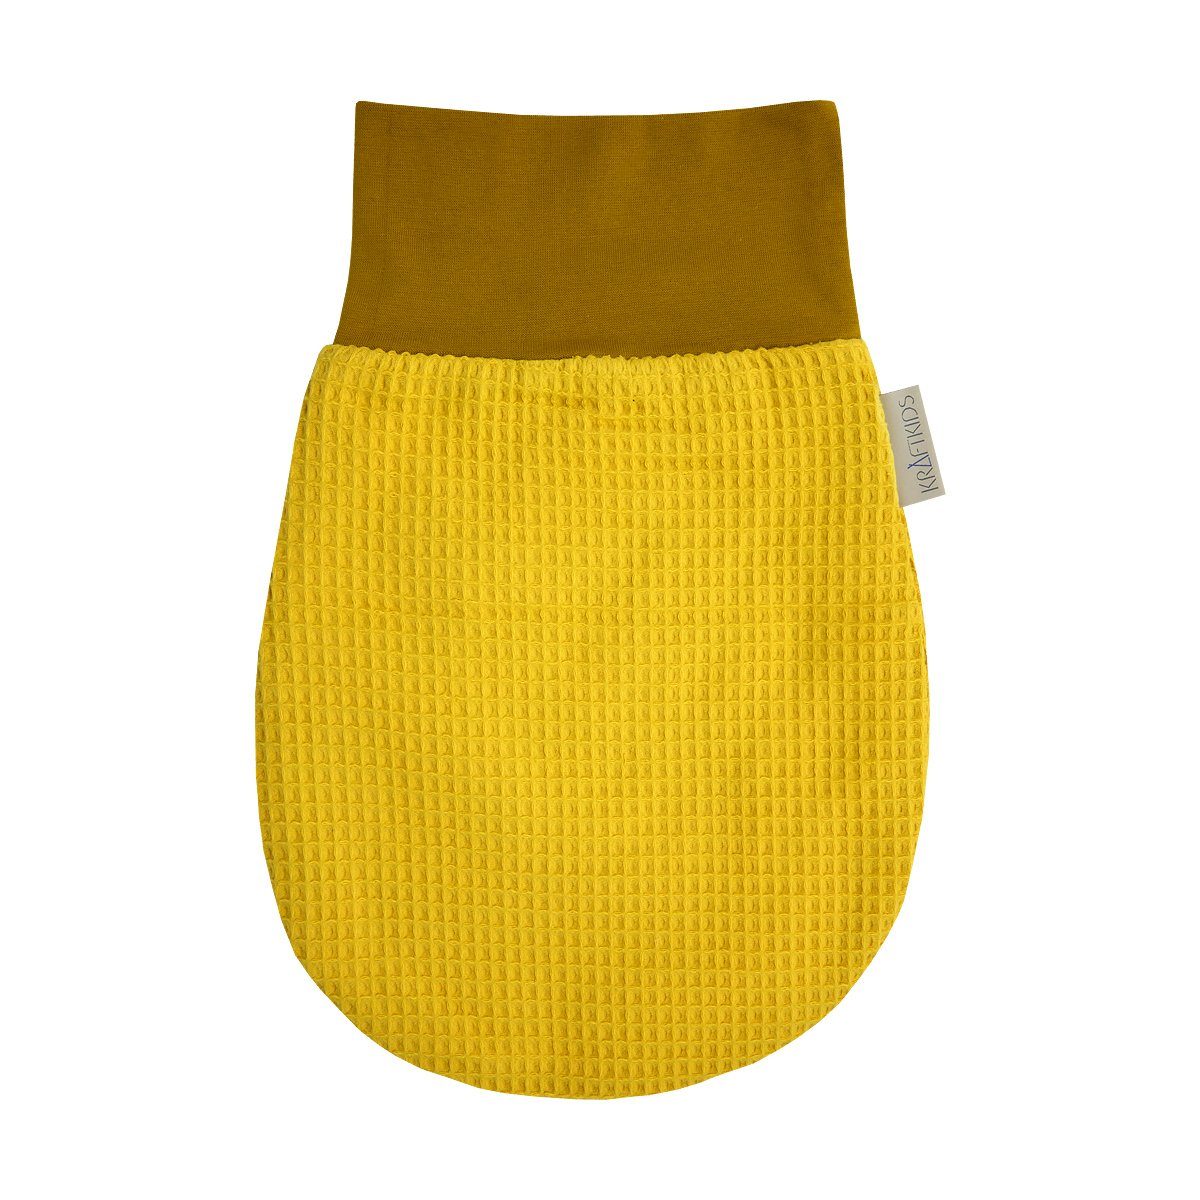 Kinder Mädchen (Gr. 50 - 92) KraftKids Babyschlafsack Waffel Piqué mustard, Sommer/Frühling-Variante, 100% Baumwolle, hochwärtig